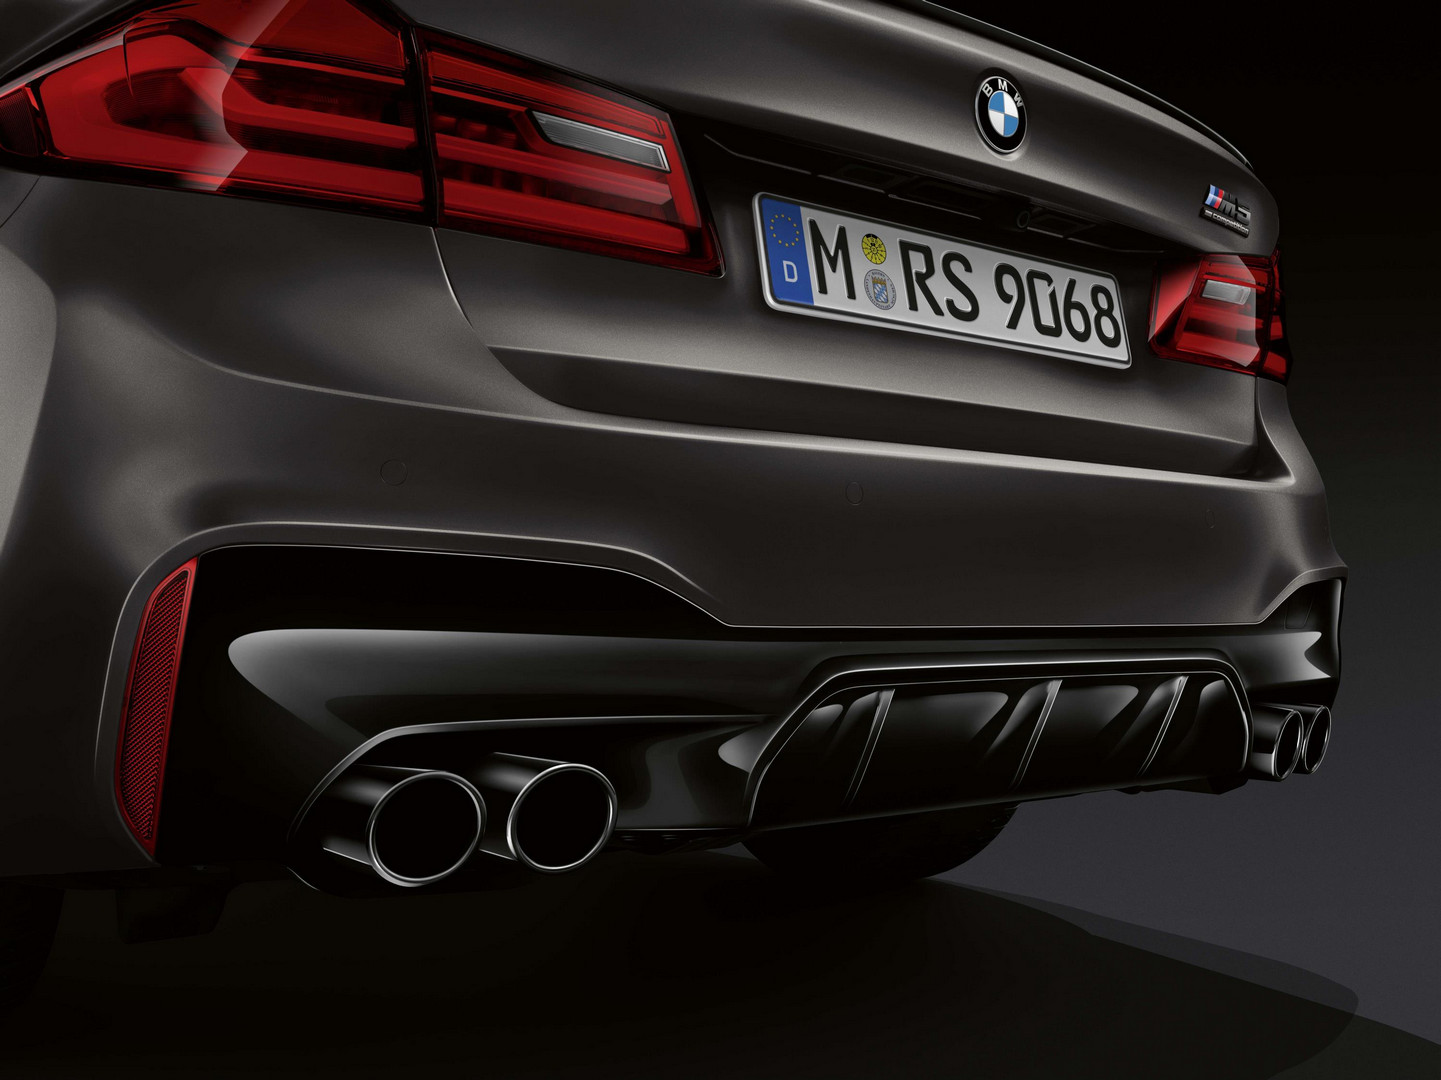 2020 BMW M5 Edition 35 Years: